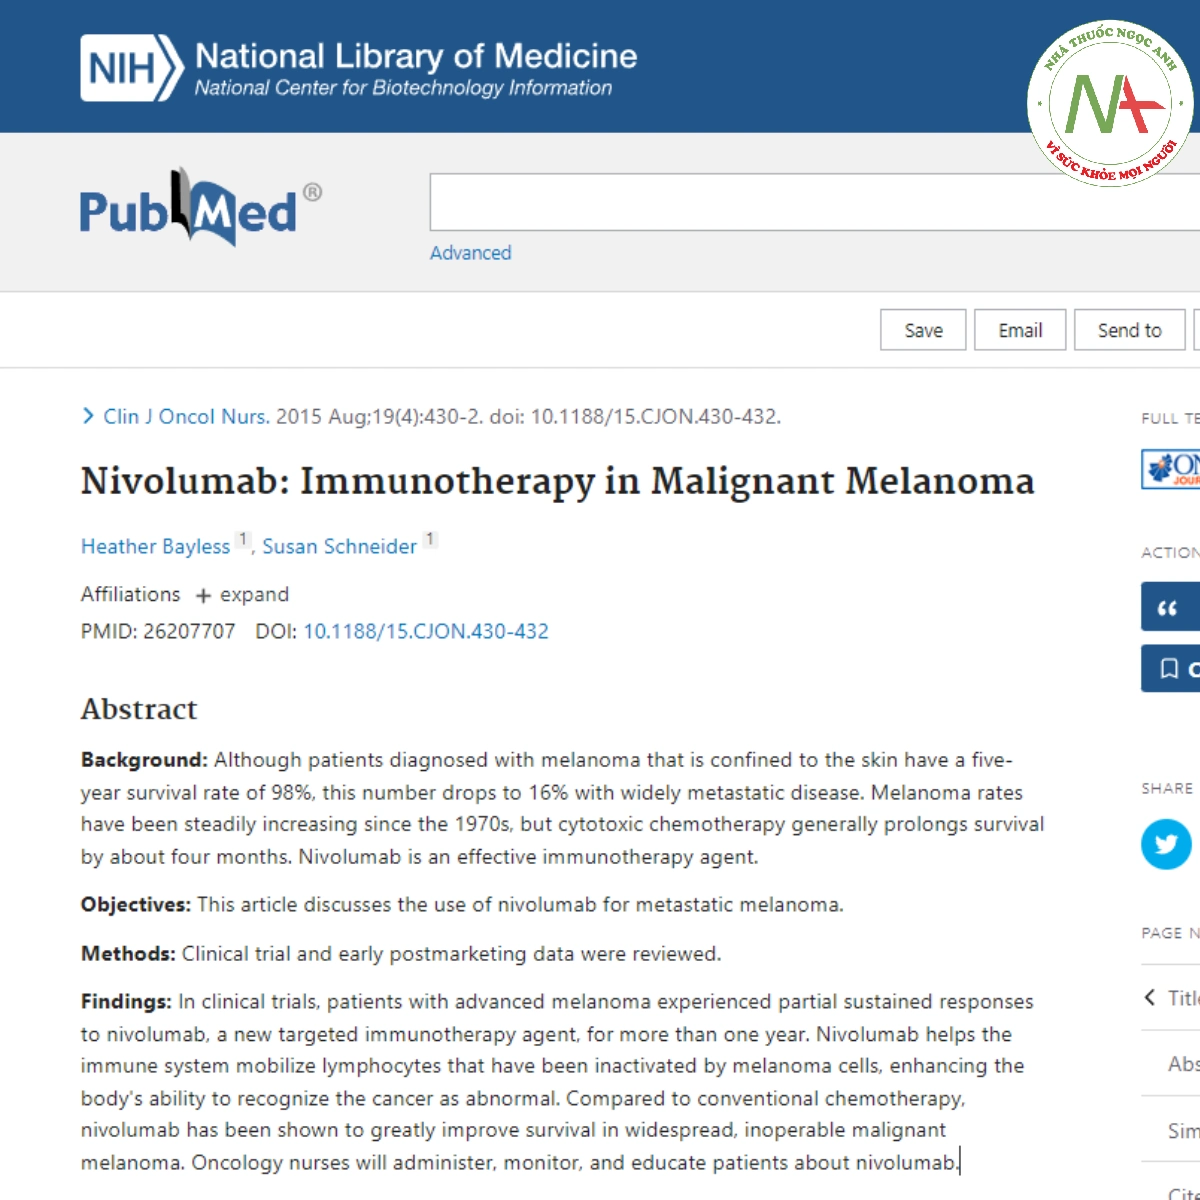 Nivolumab: Immunotherapy in Malignant Melanoma